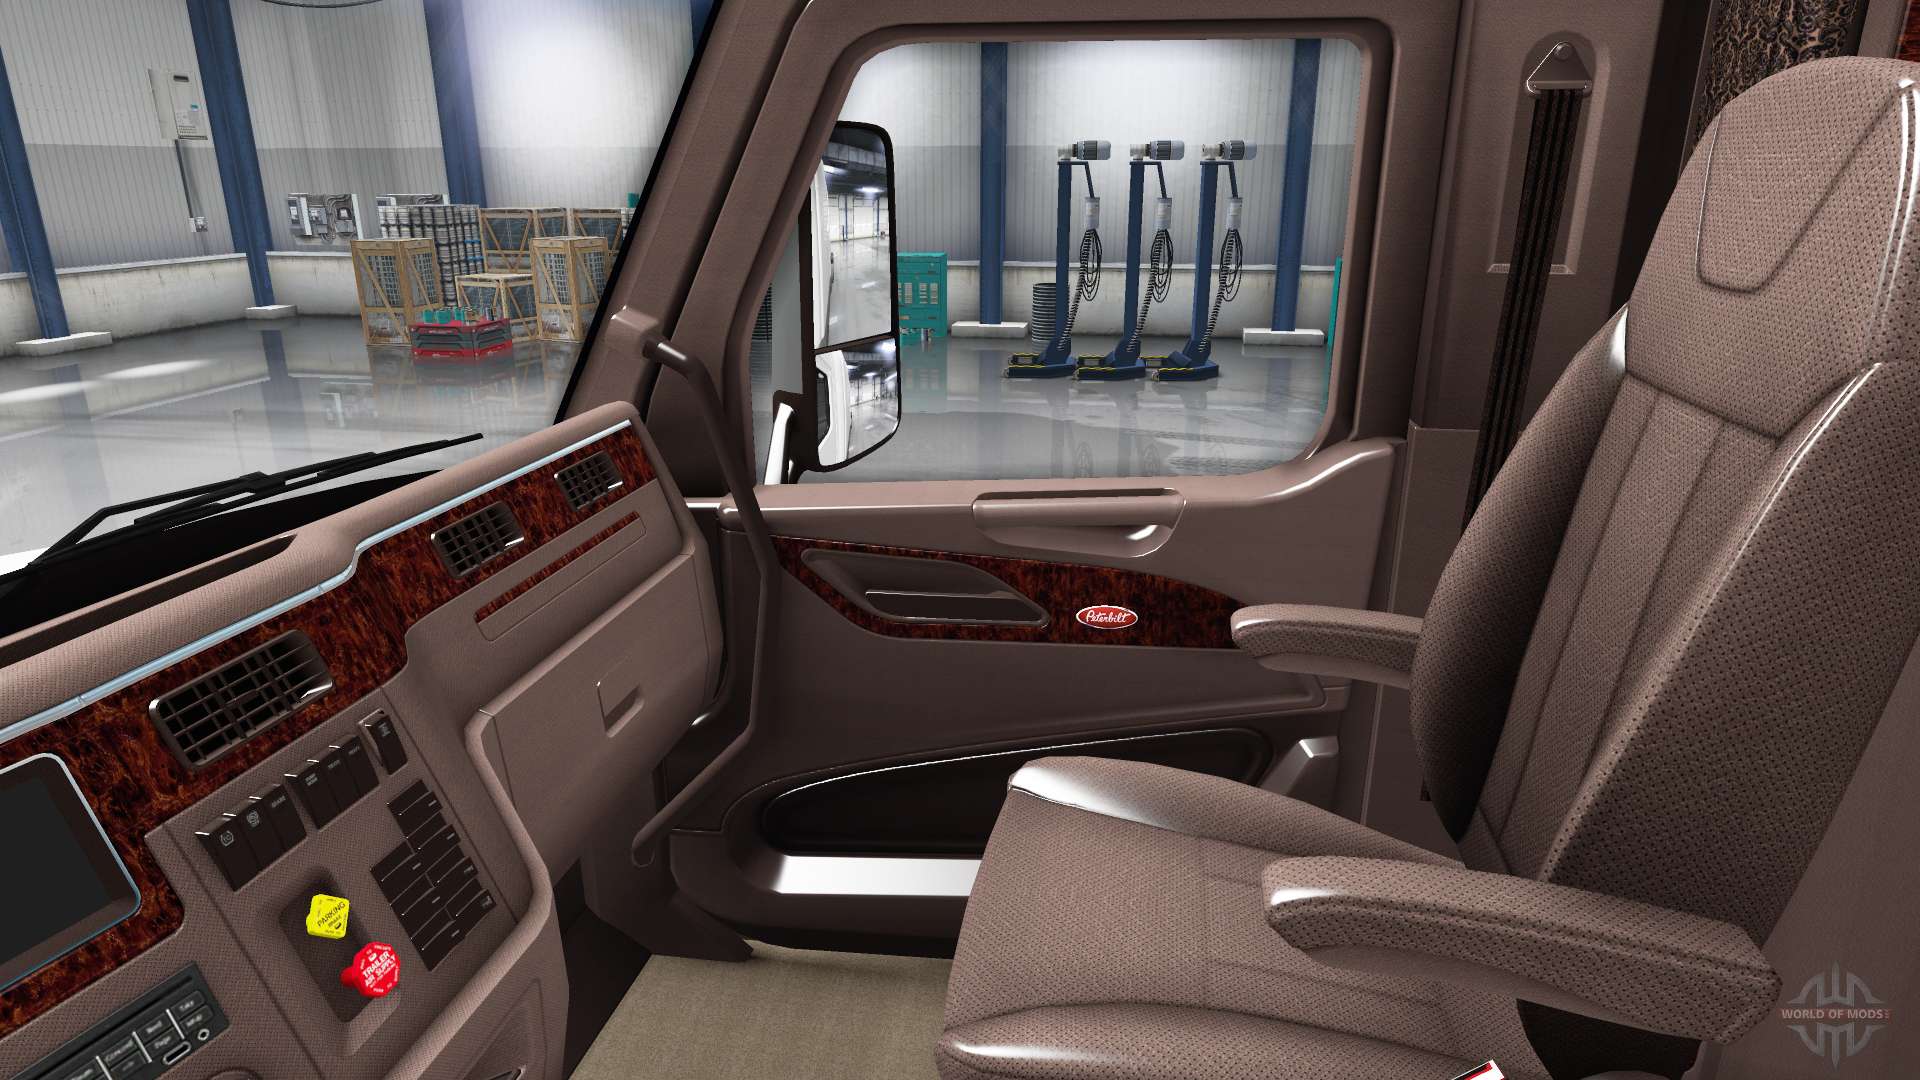 Luxury brown interior Peterbilt 579 for American Truck Simulator